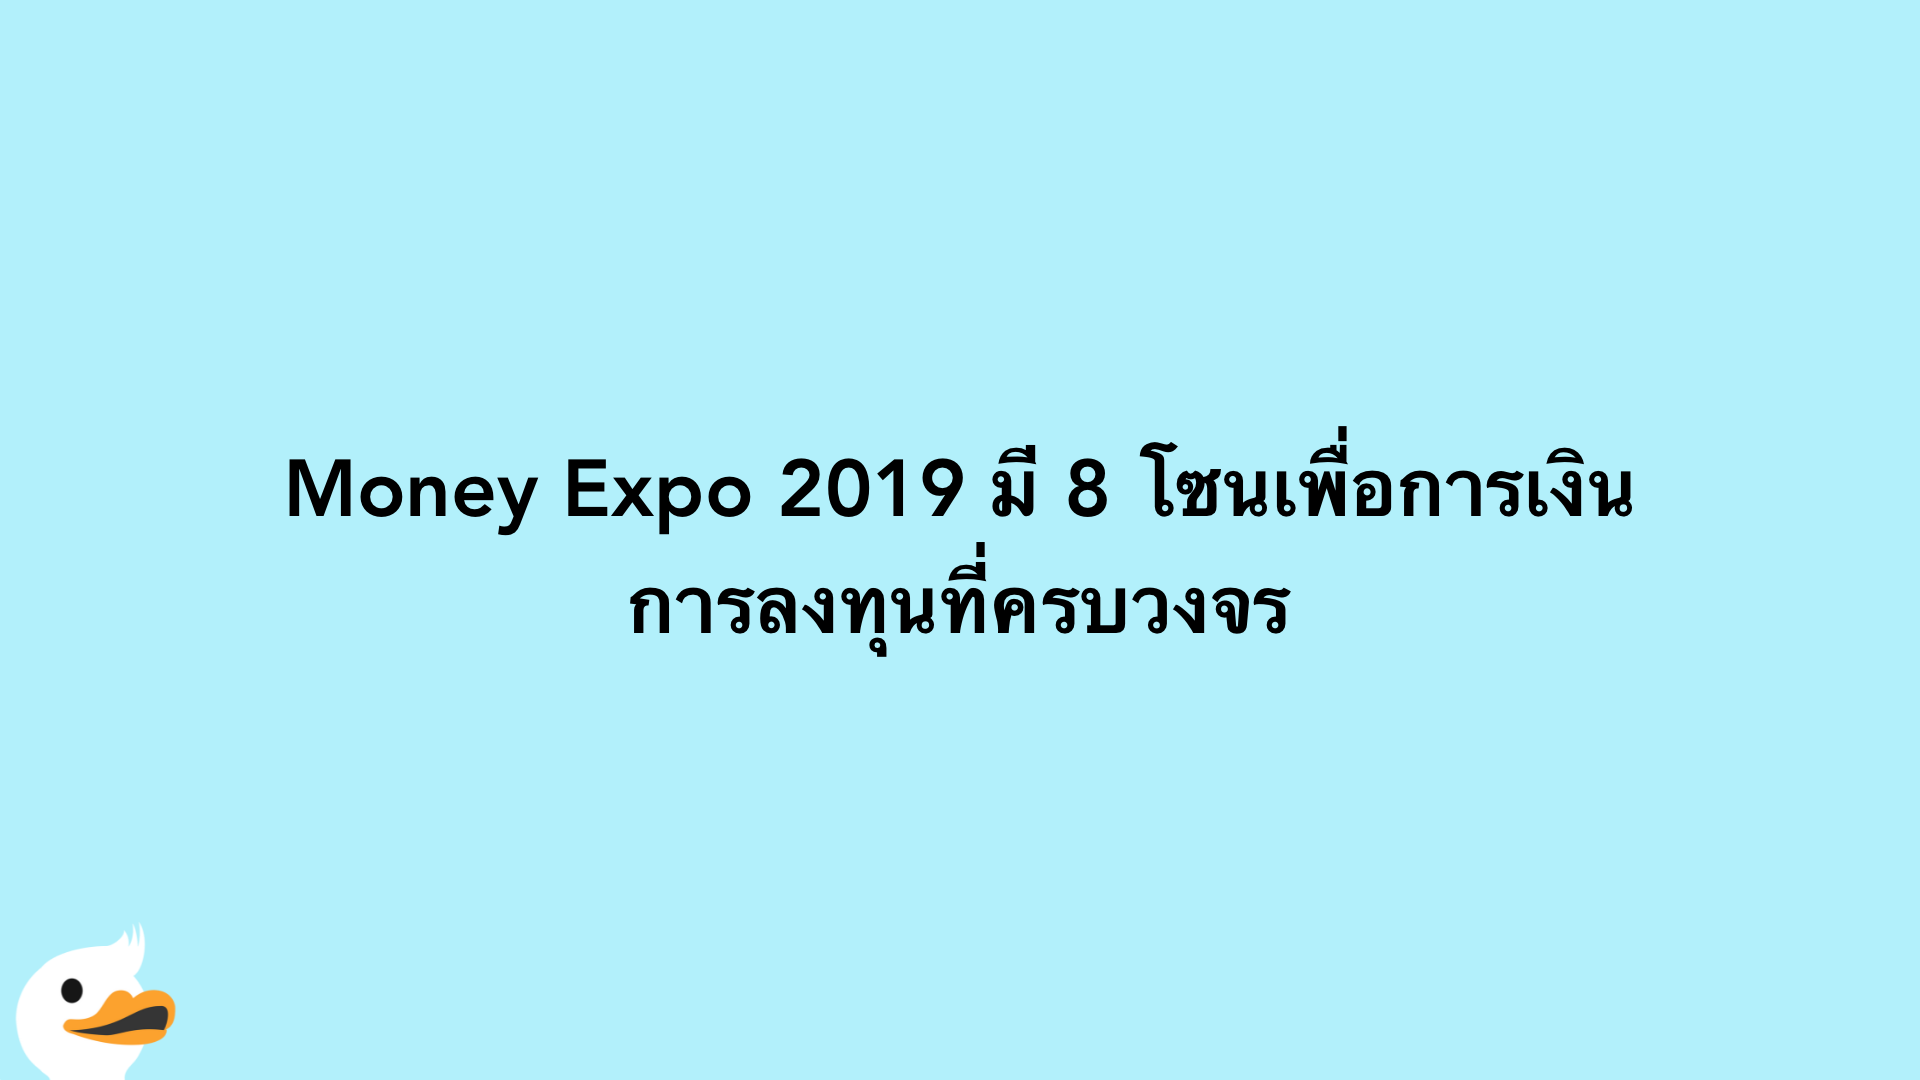 Money Expo 2019 มี 8 โซนเพื่อการเงินการลงทุนที่ครบวงจร